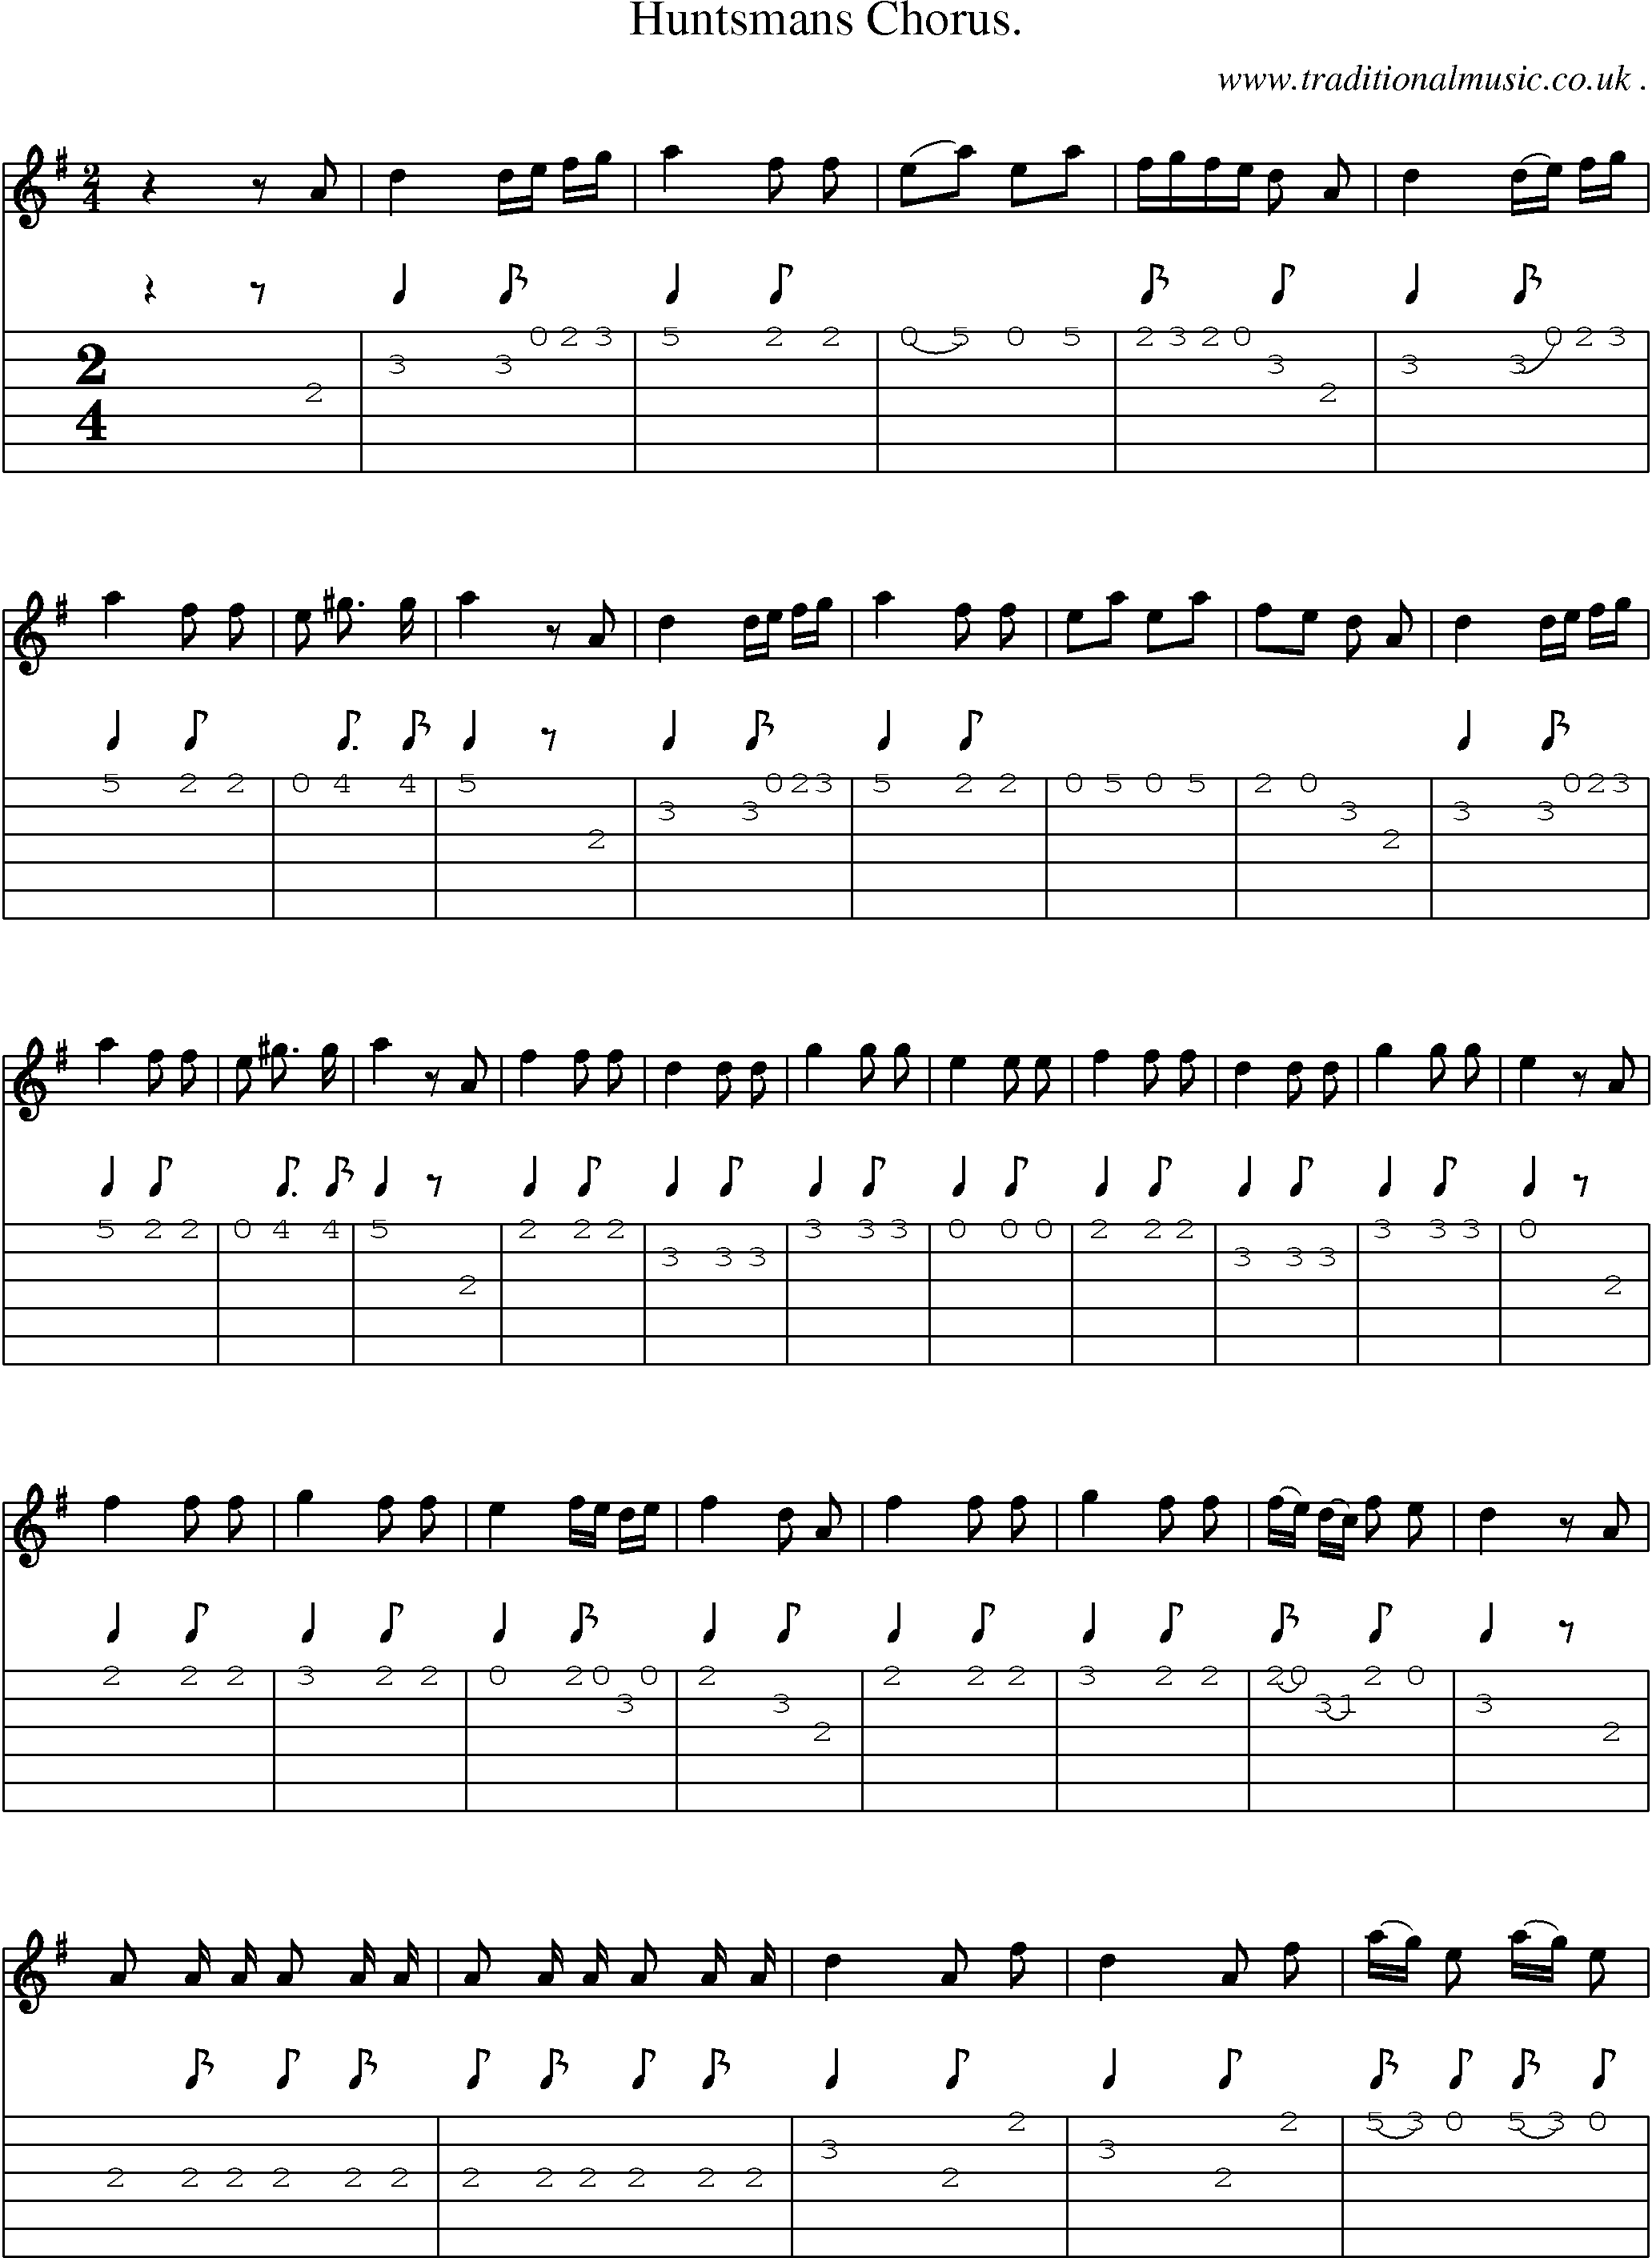 Sheet-Music and Guitar Tabs for Huntsmans Chorus